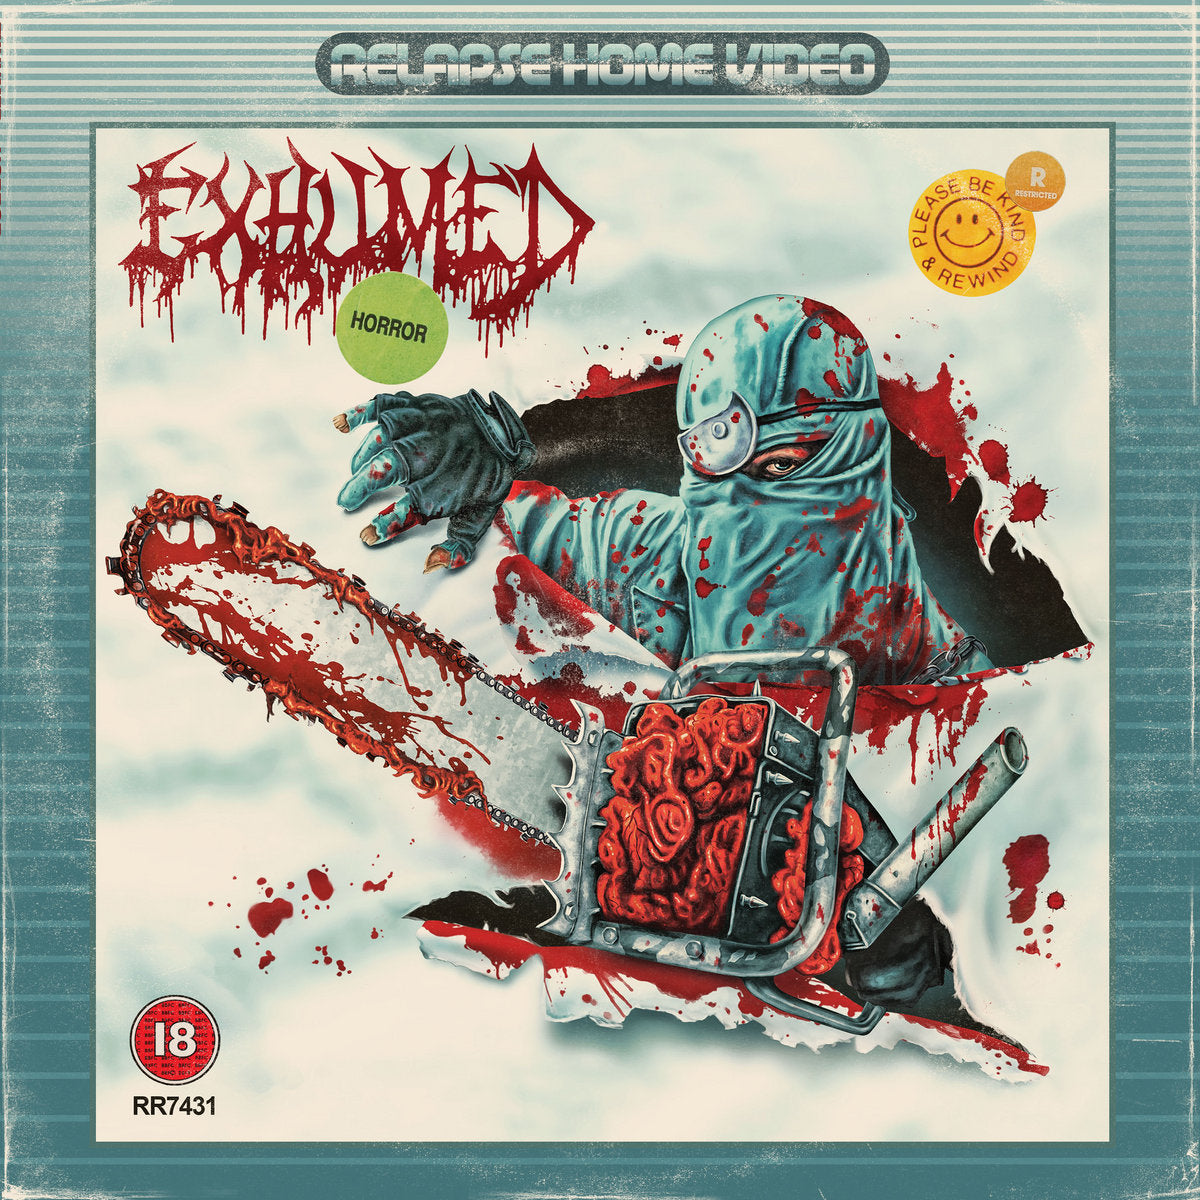 Exhumed "Horror" 12" Vinyl